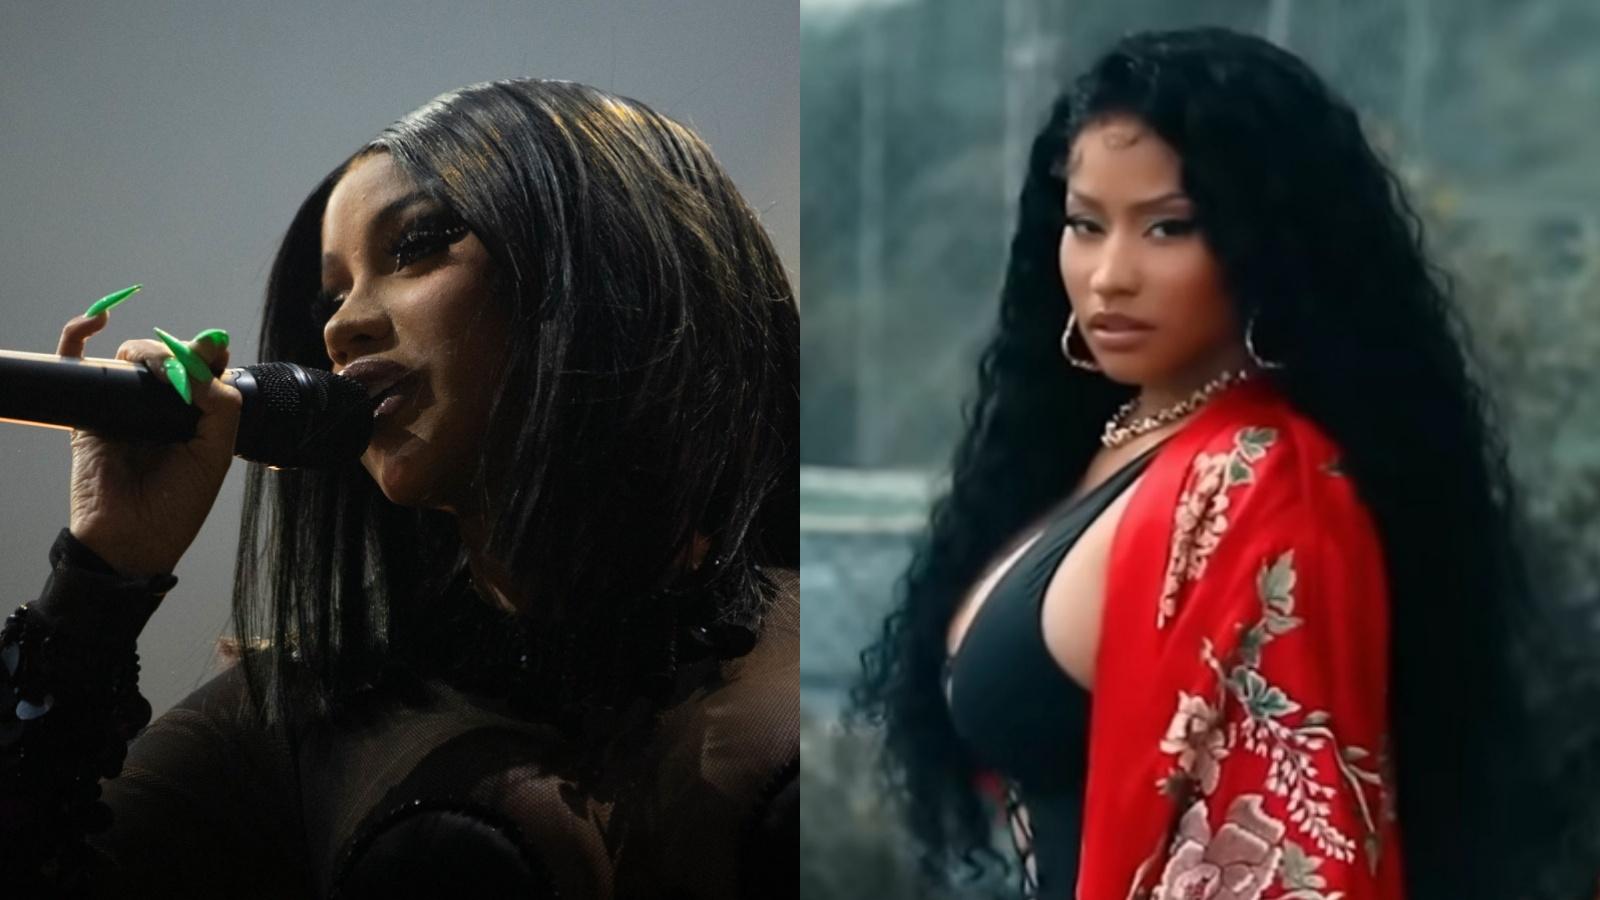 Cardi B and Nicki Minaj in a side-by-side photo